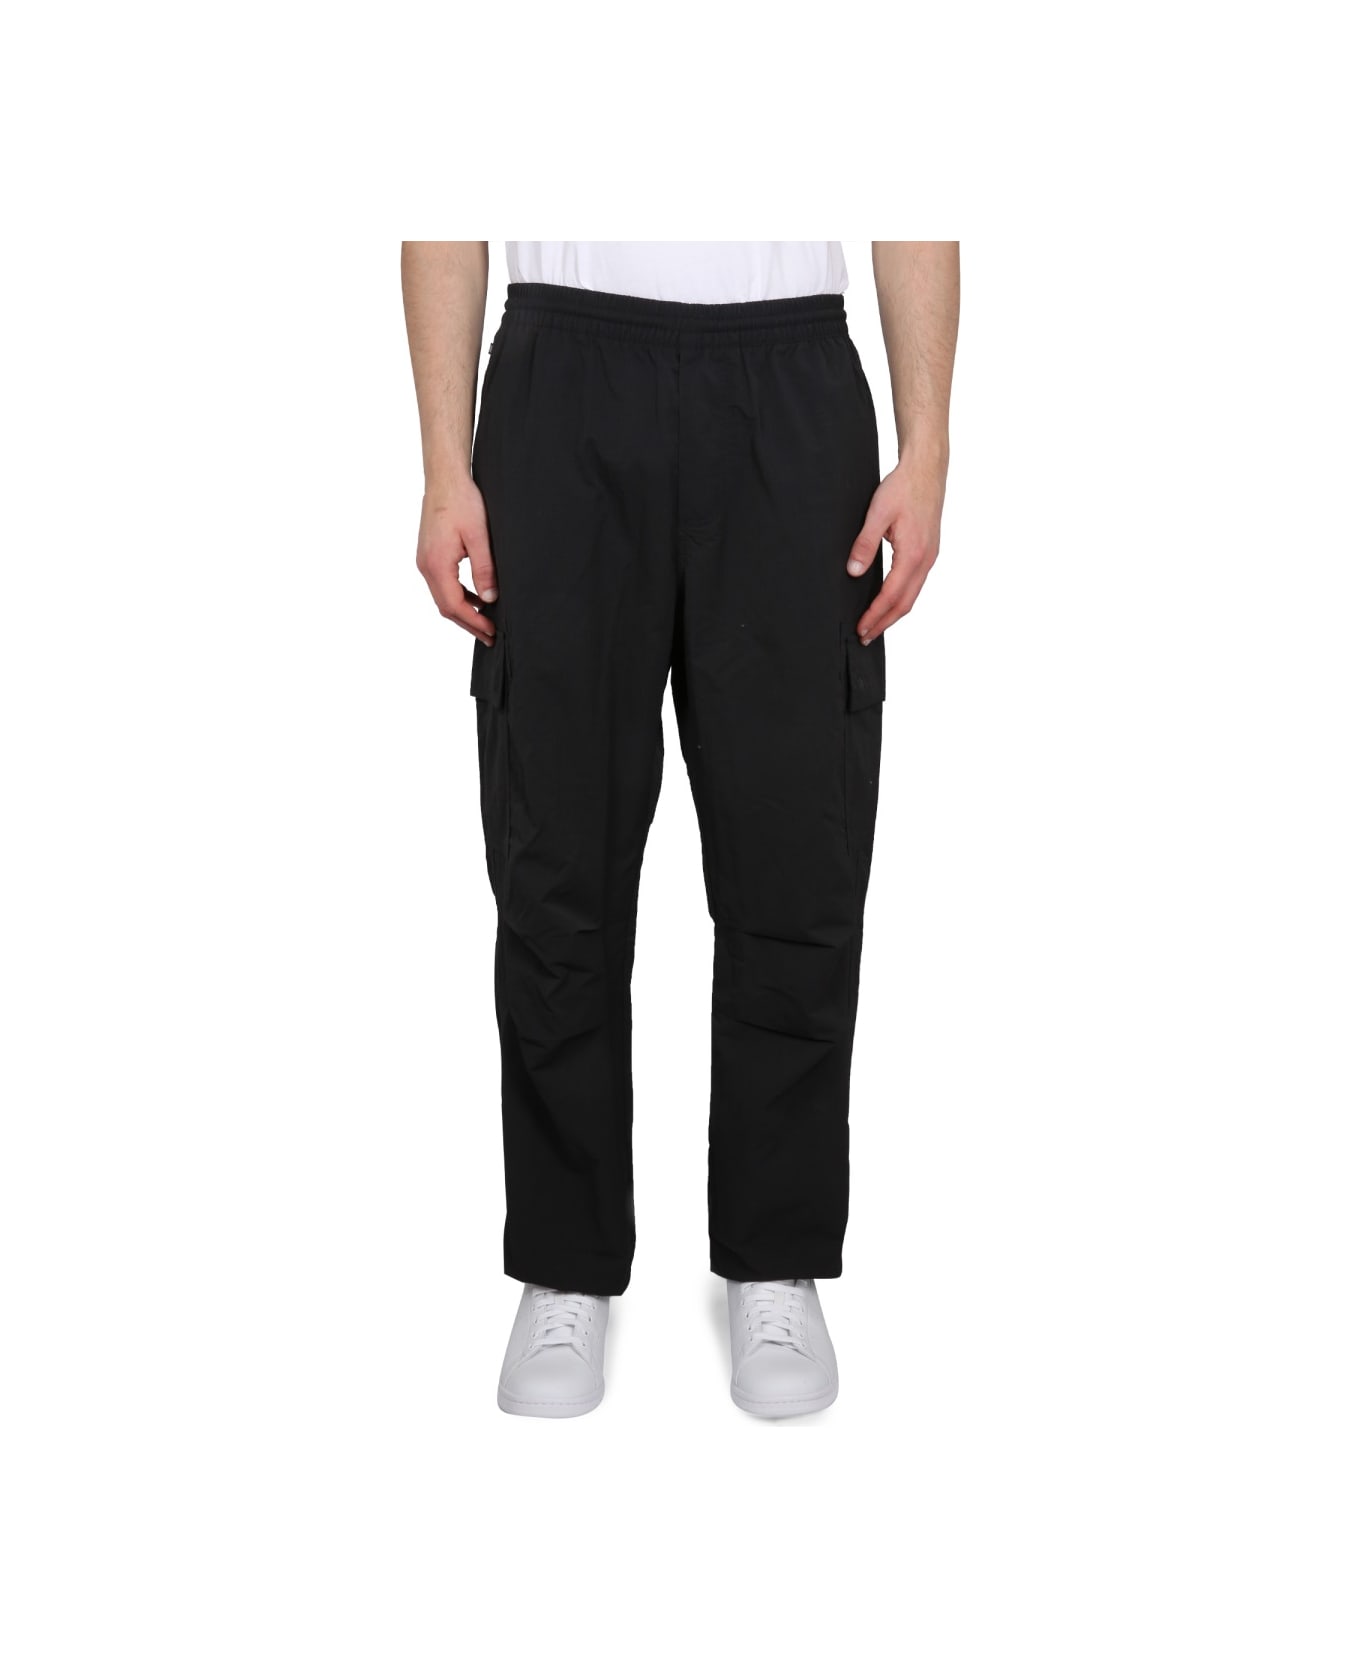 Adidas Originals Cargo Pants - BLACK